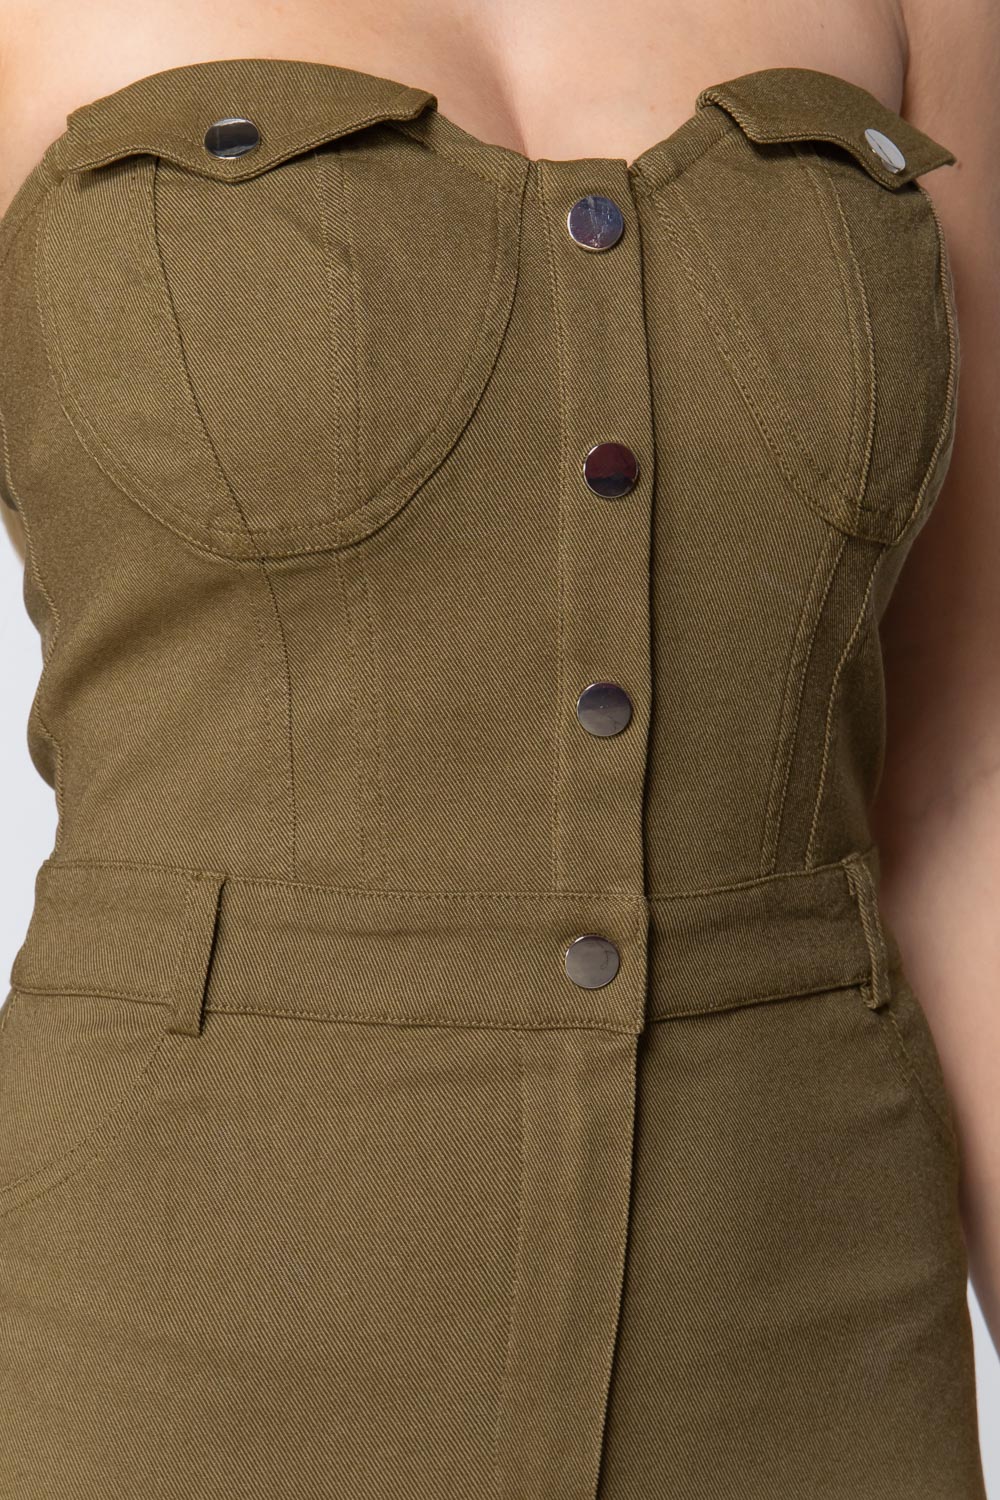 Women Strapless Button Down Mini Dress in Light Olive Green